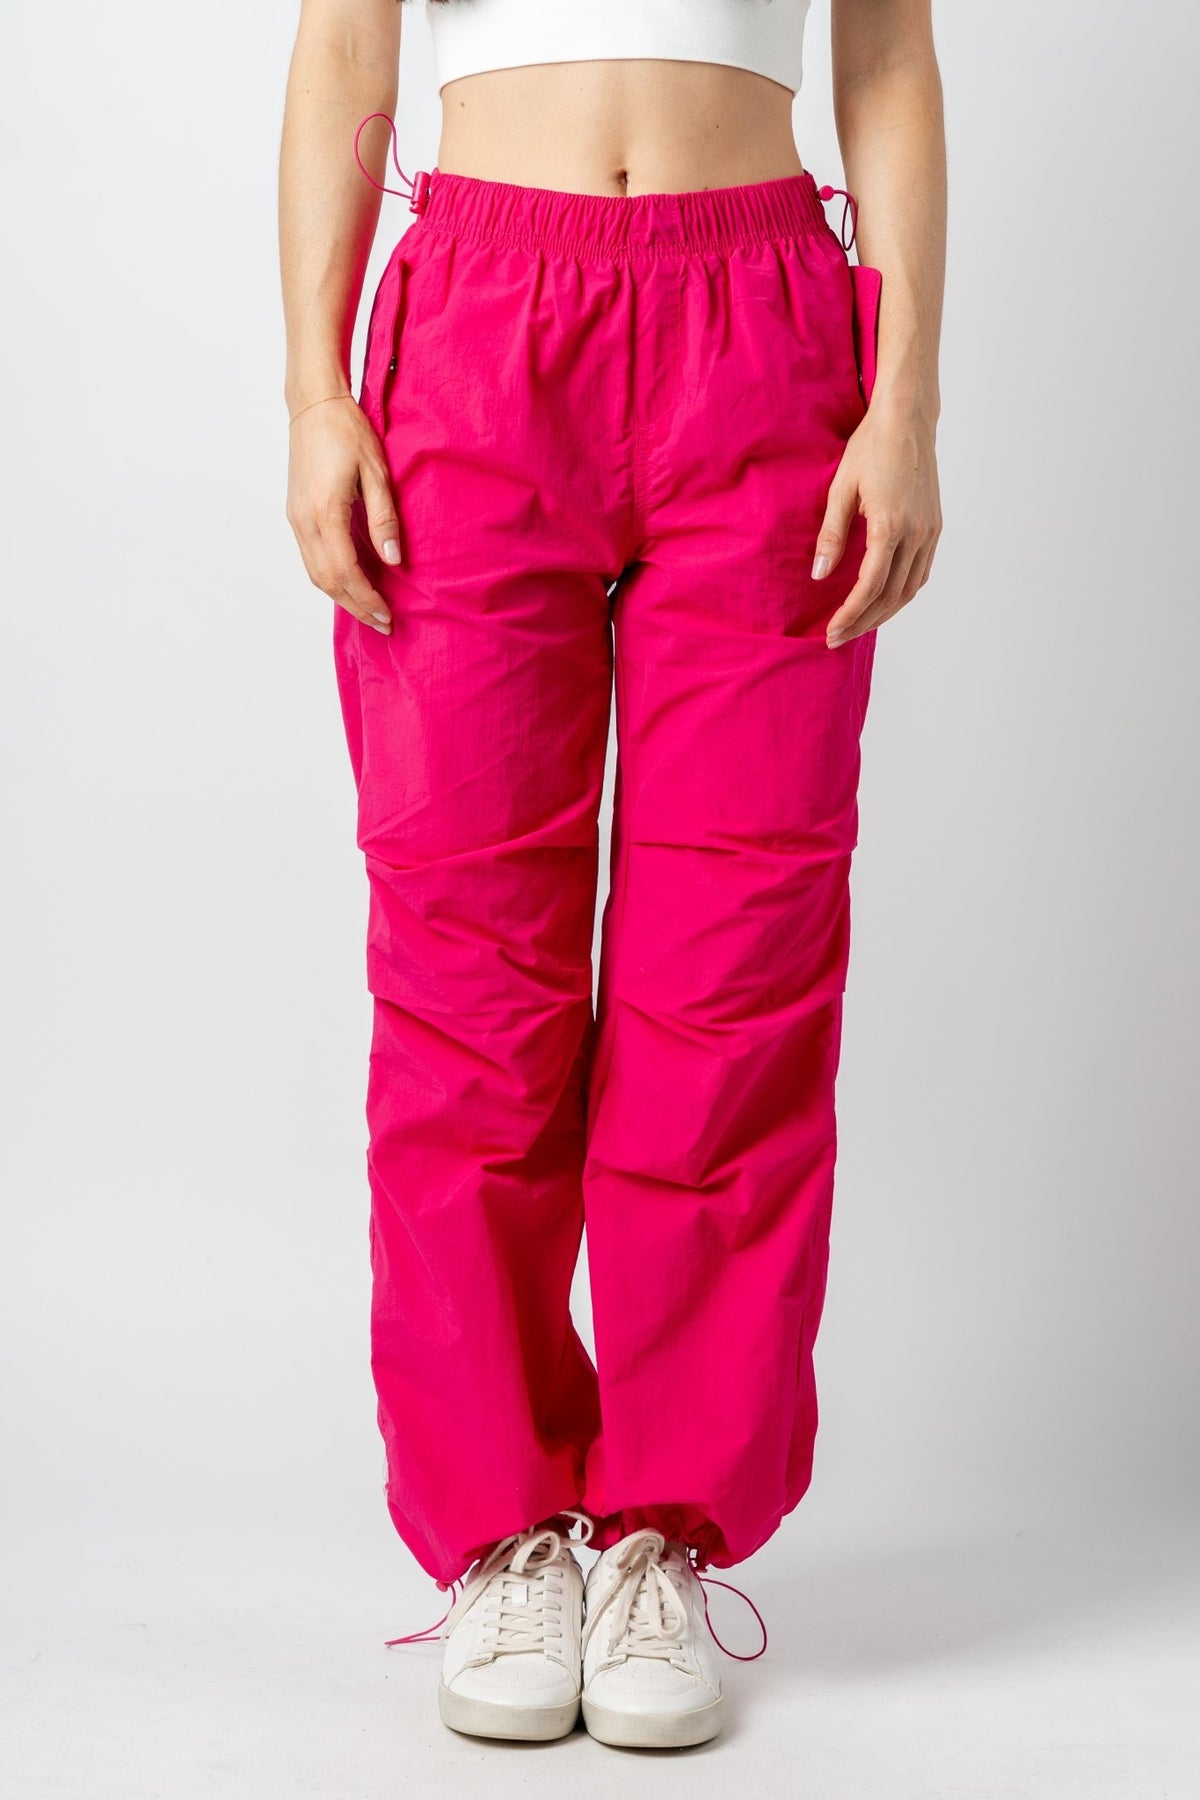 Ruched cargo pants magenta | Lush Fashion Lounge: women's boutique pants, boutique women's pants, affordable boutique pants, women's fashion pants